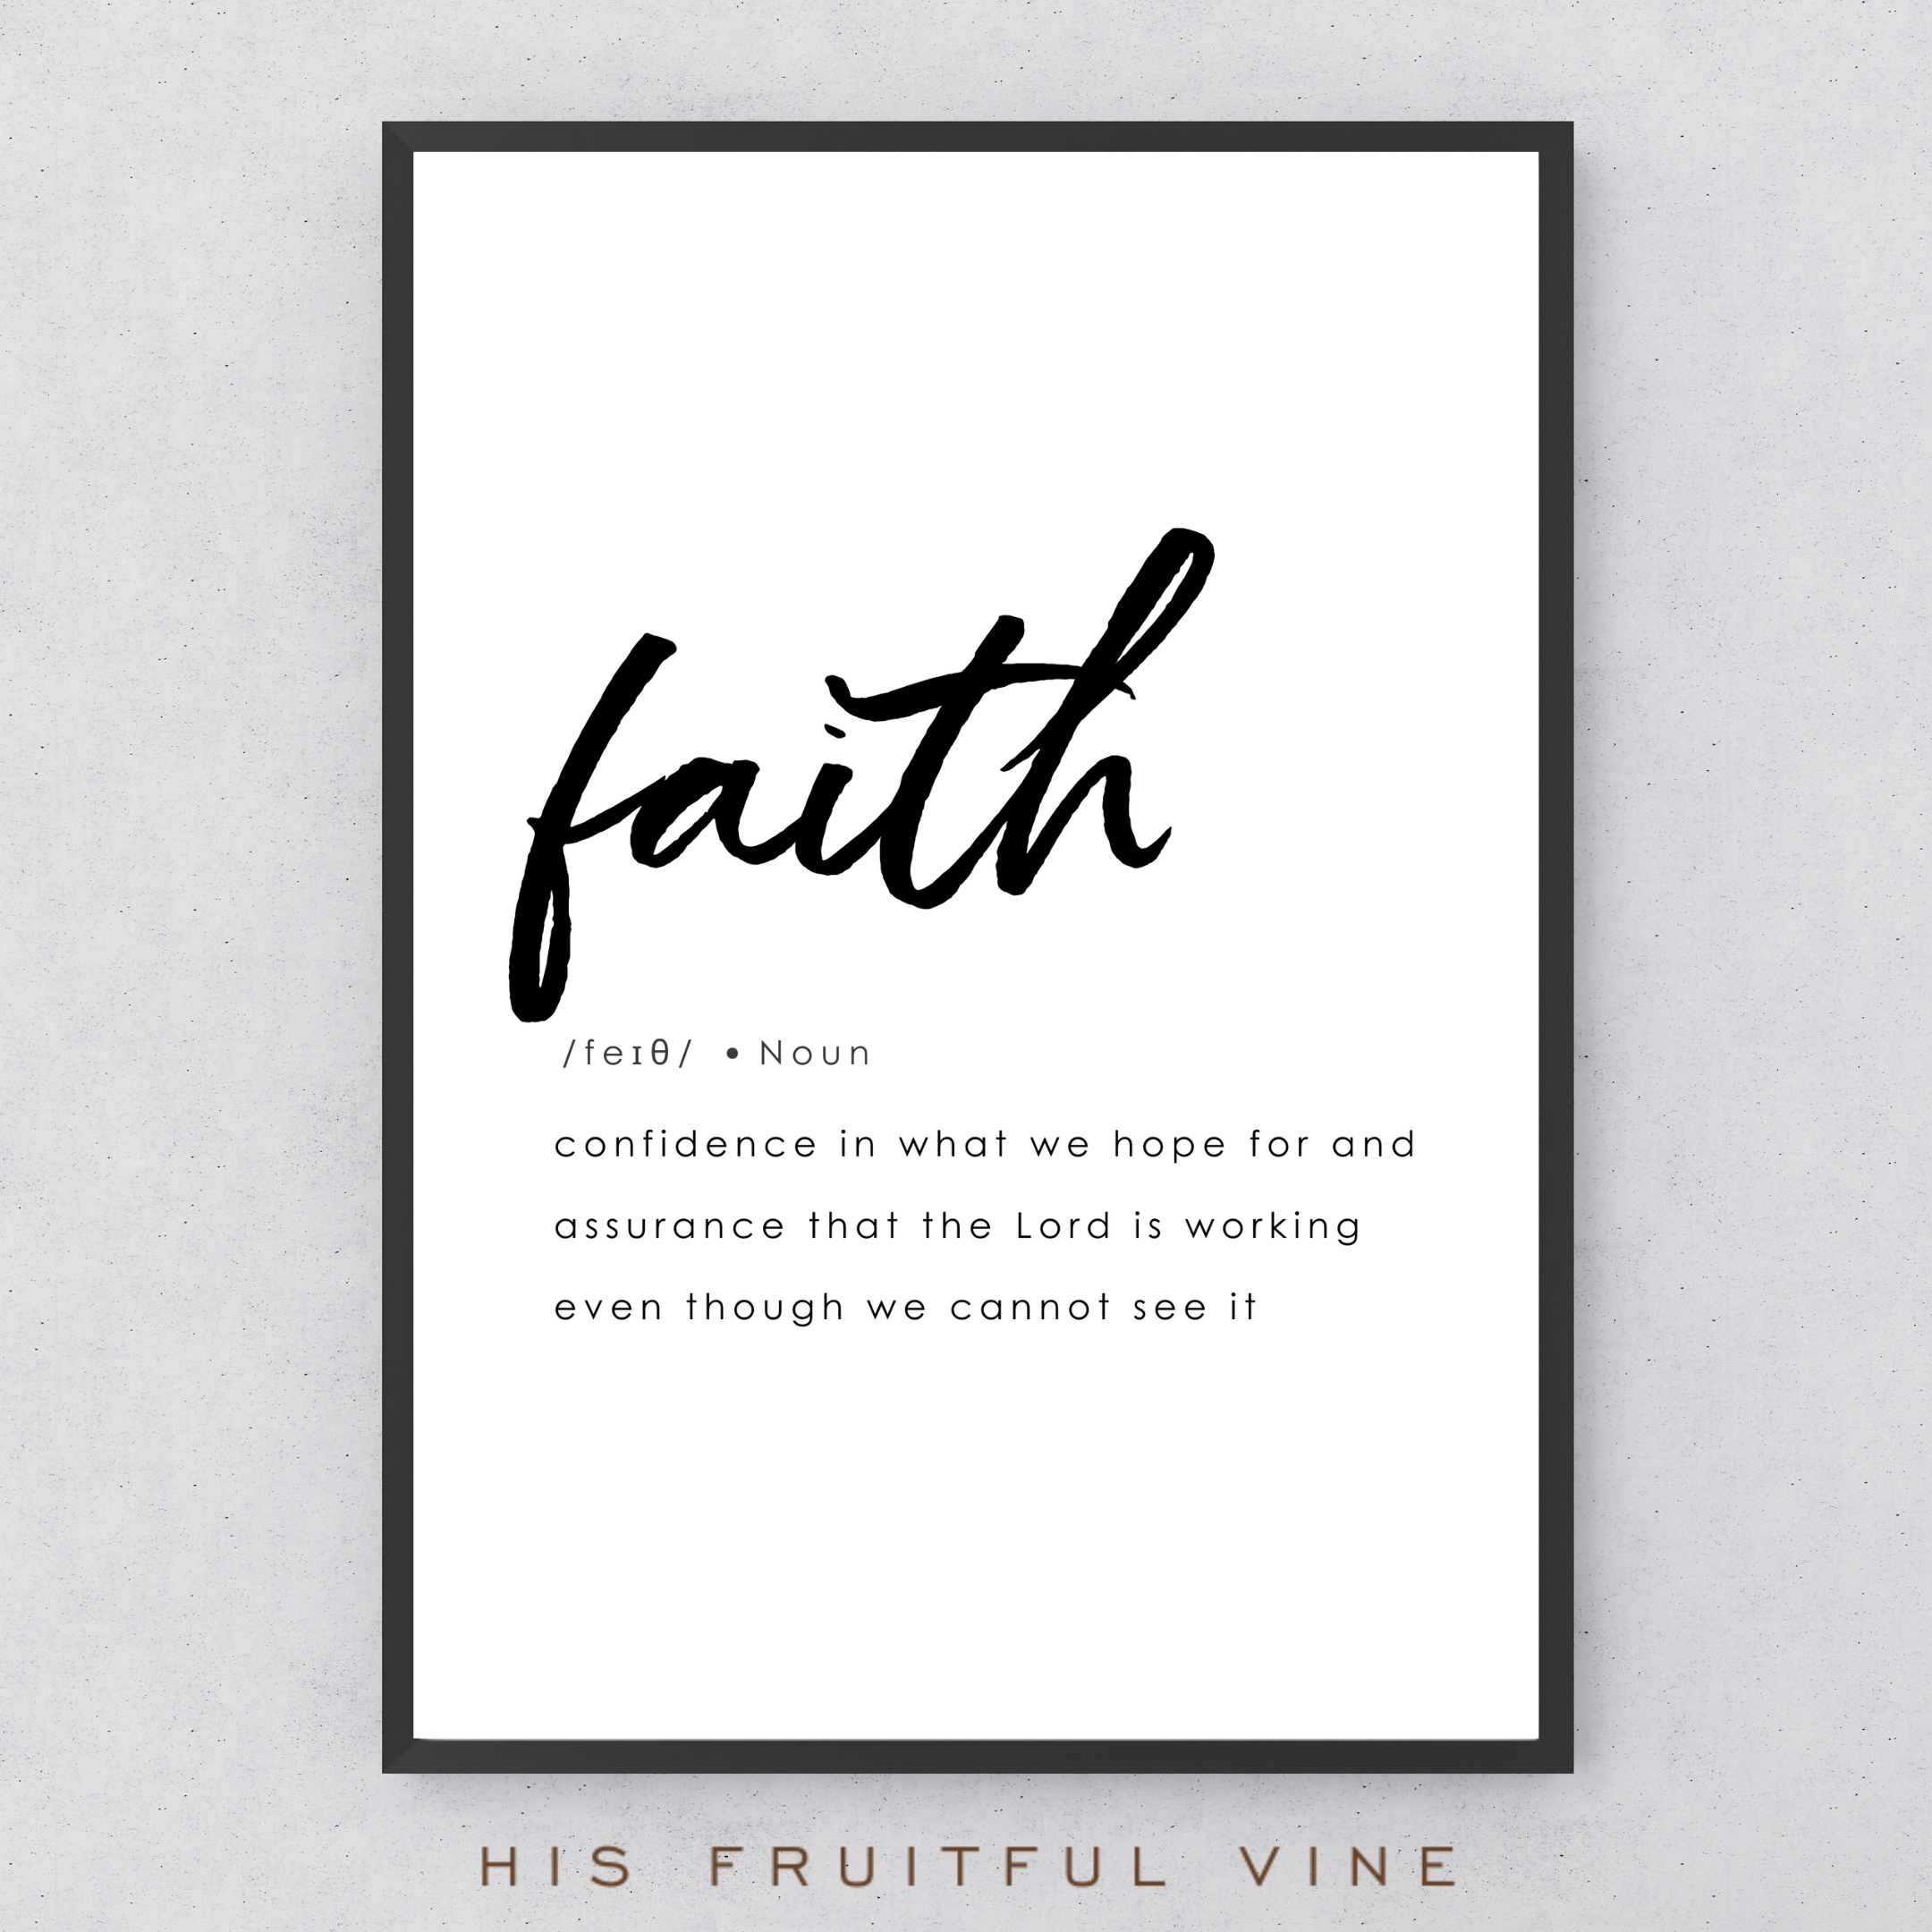 Faith, A3 Print in Black Frame by His Fruitful Vine